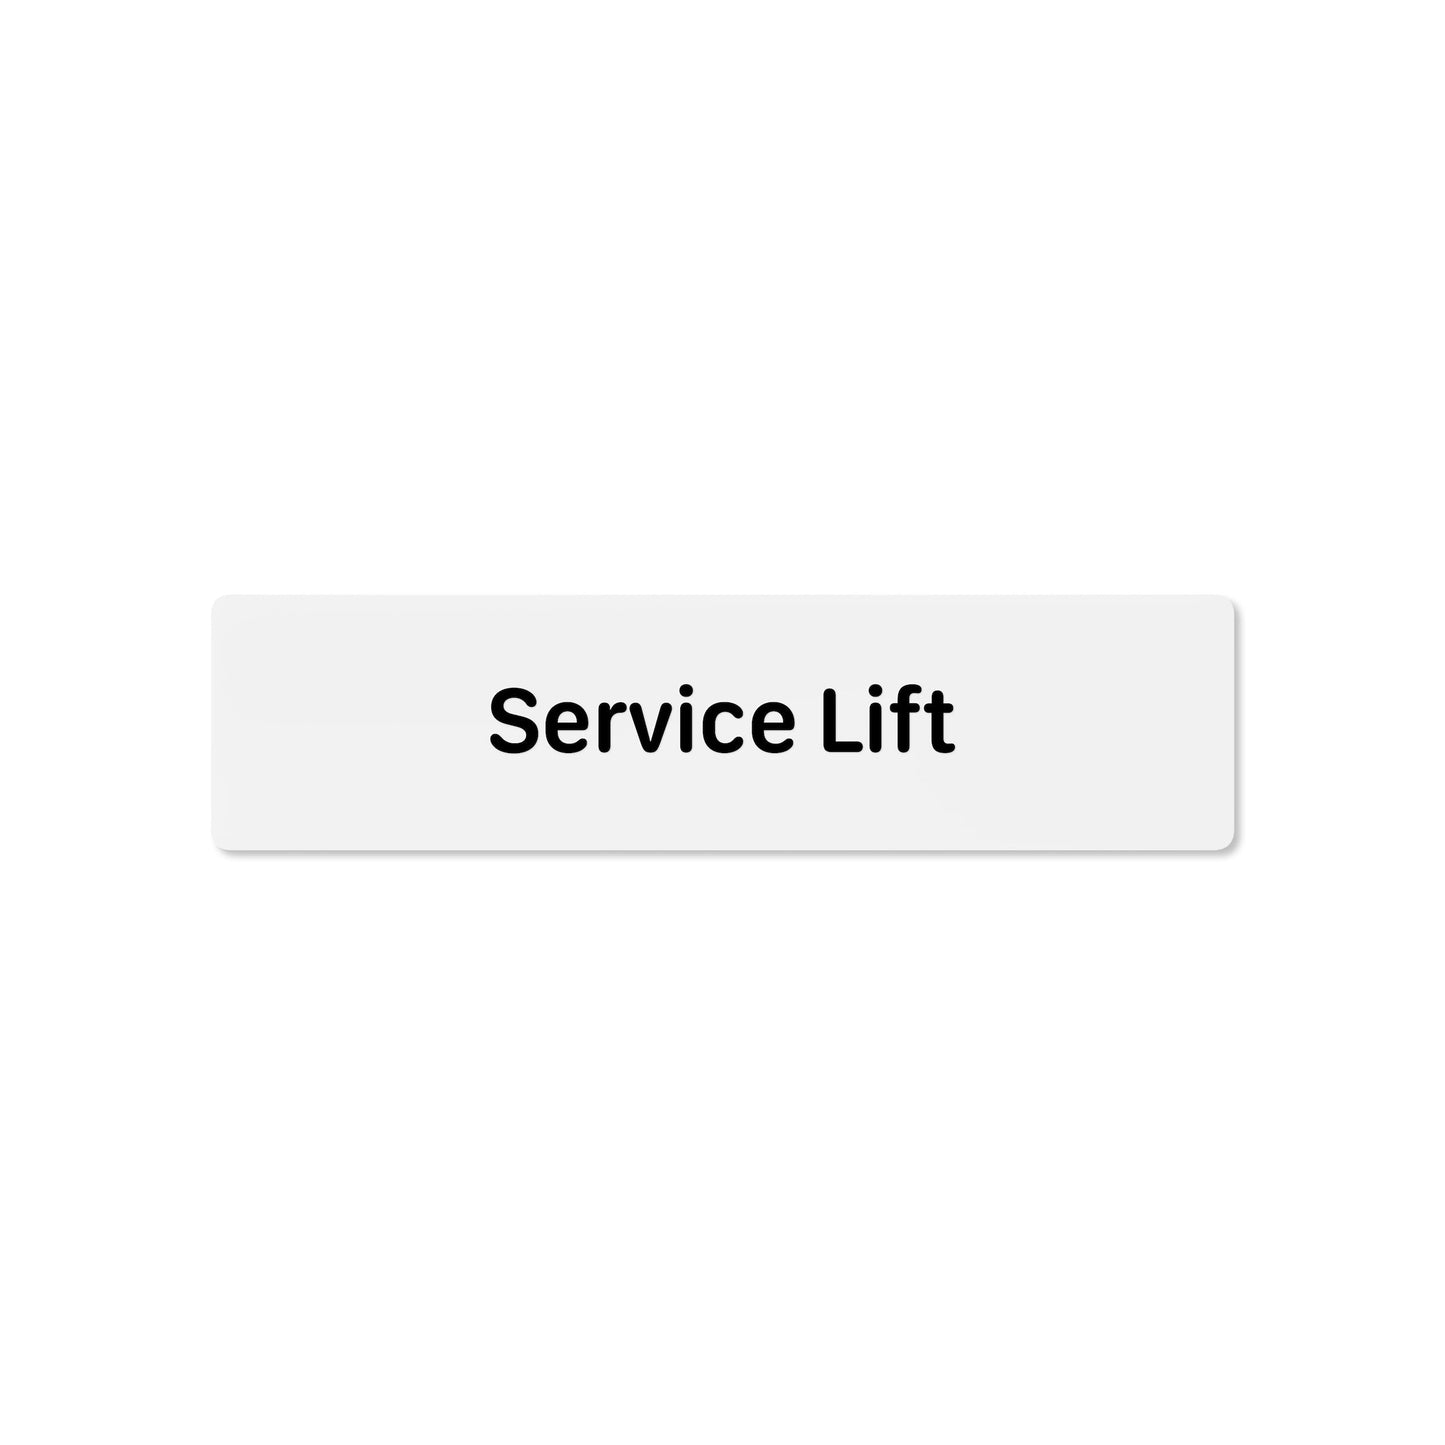 Service Lift